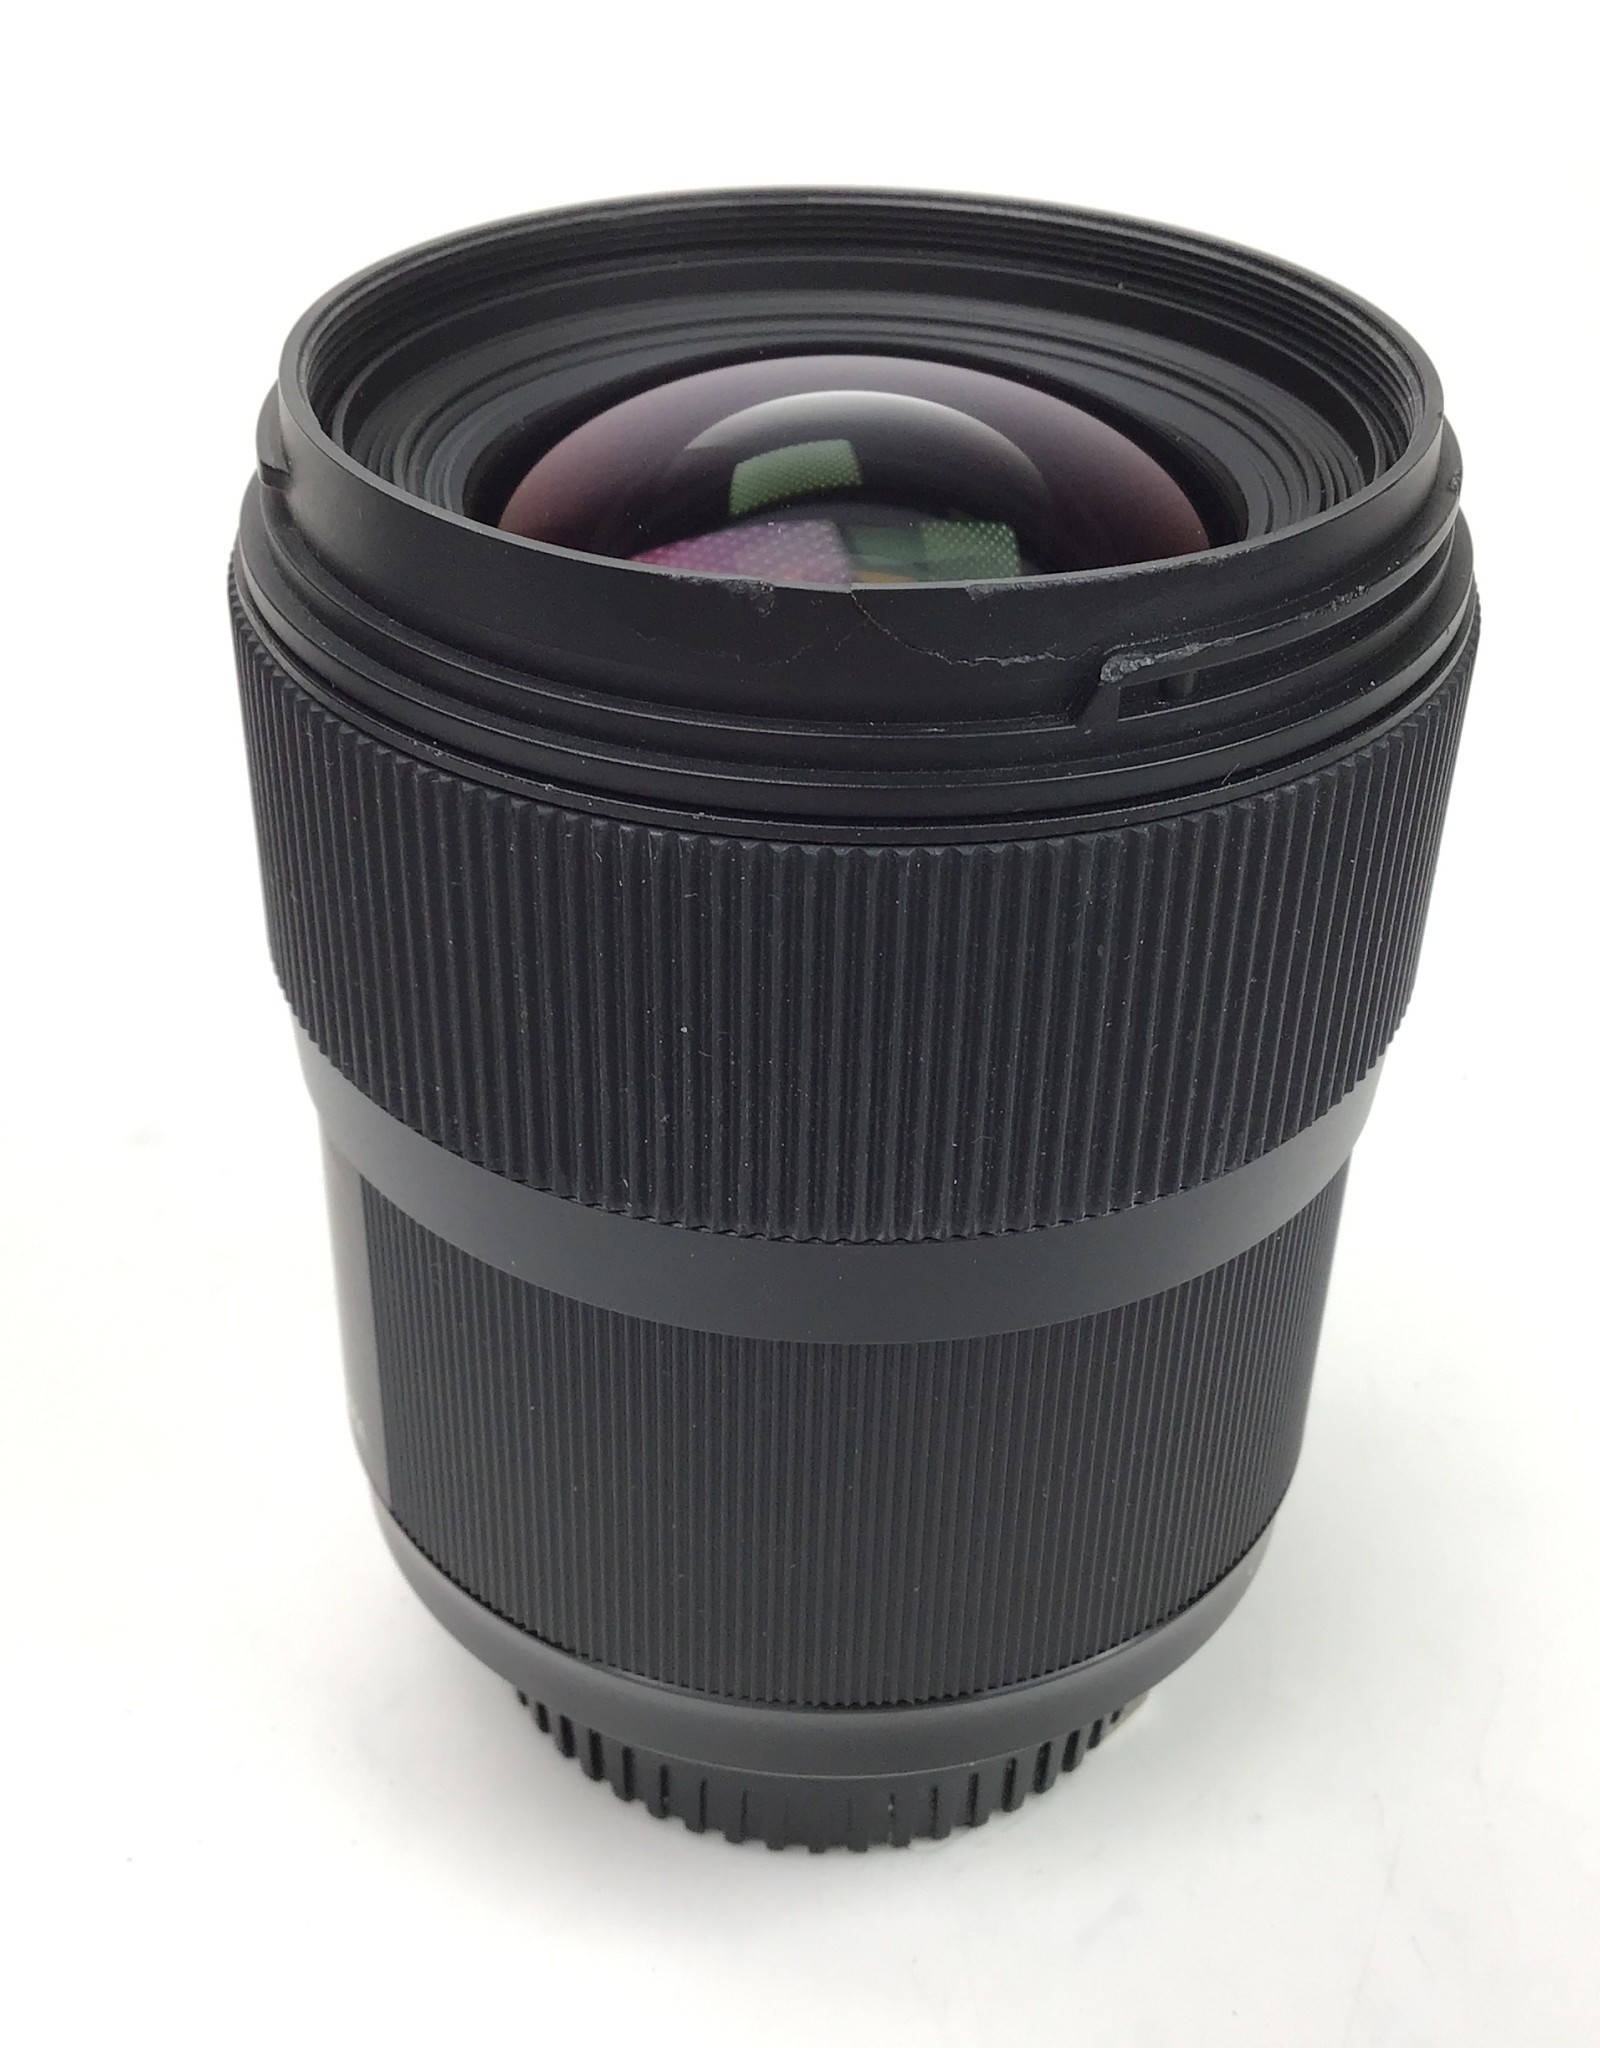 NIKON Sigma 35mm f1.4 DG Art Lens for Nikon Used Fair